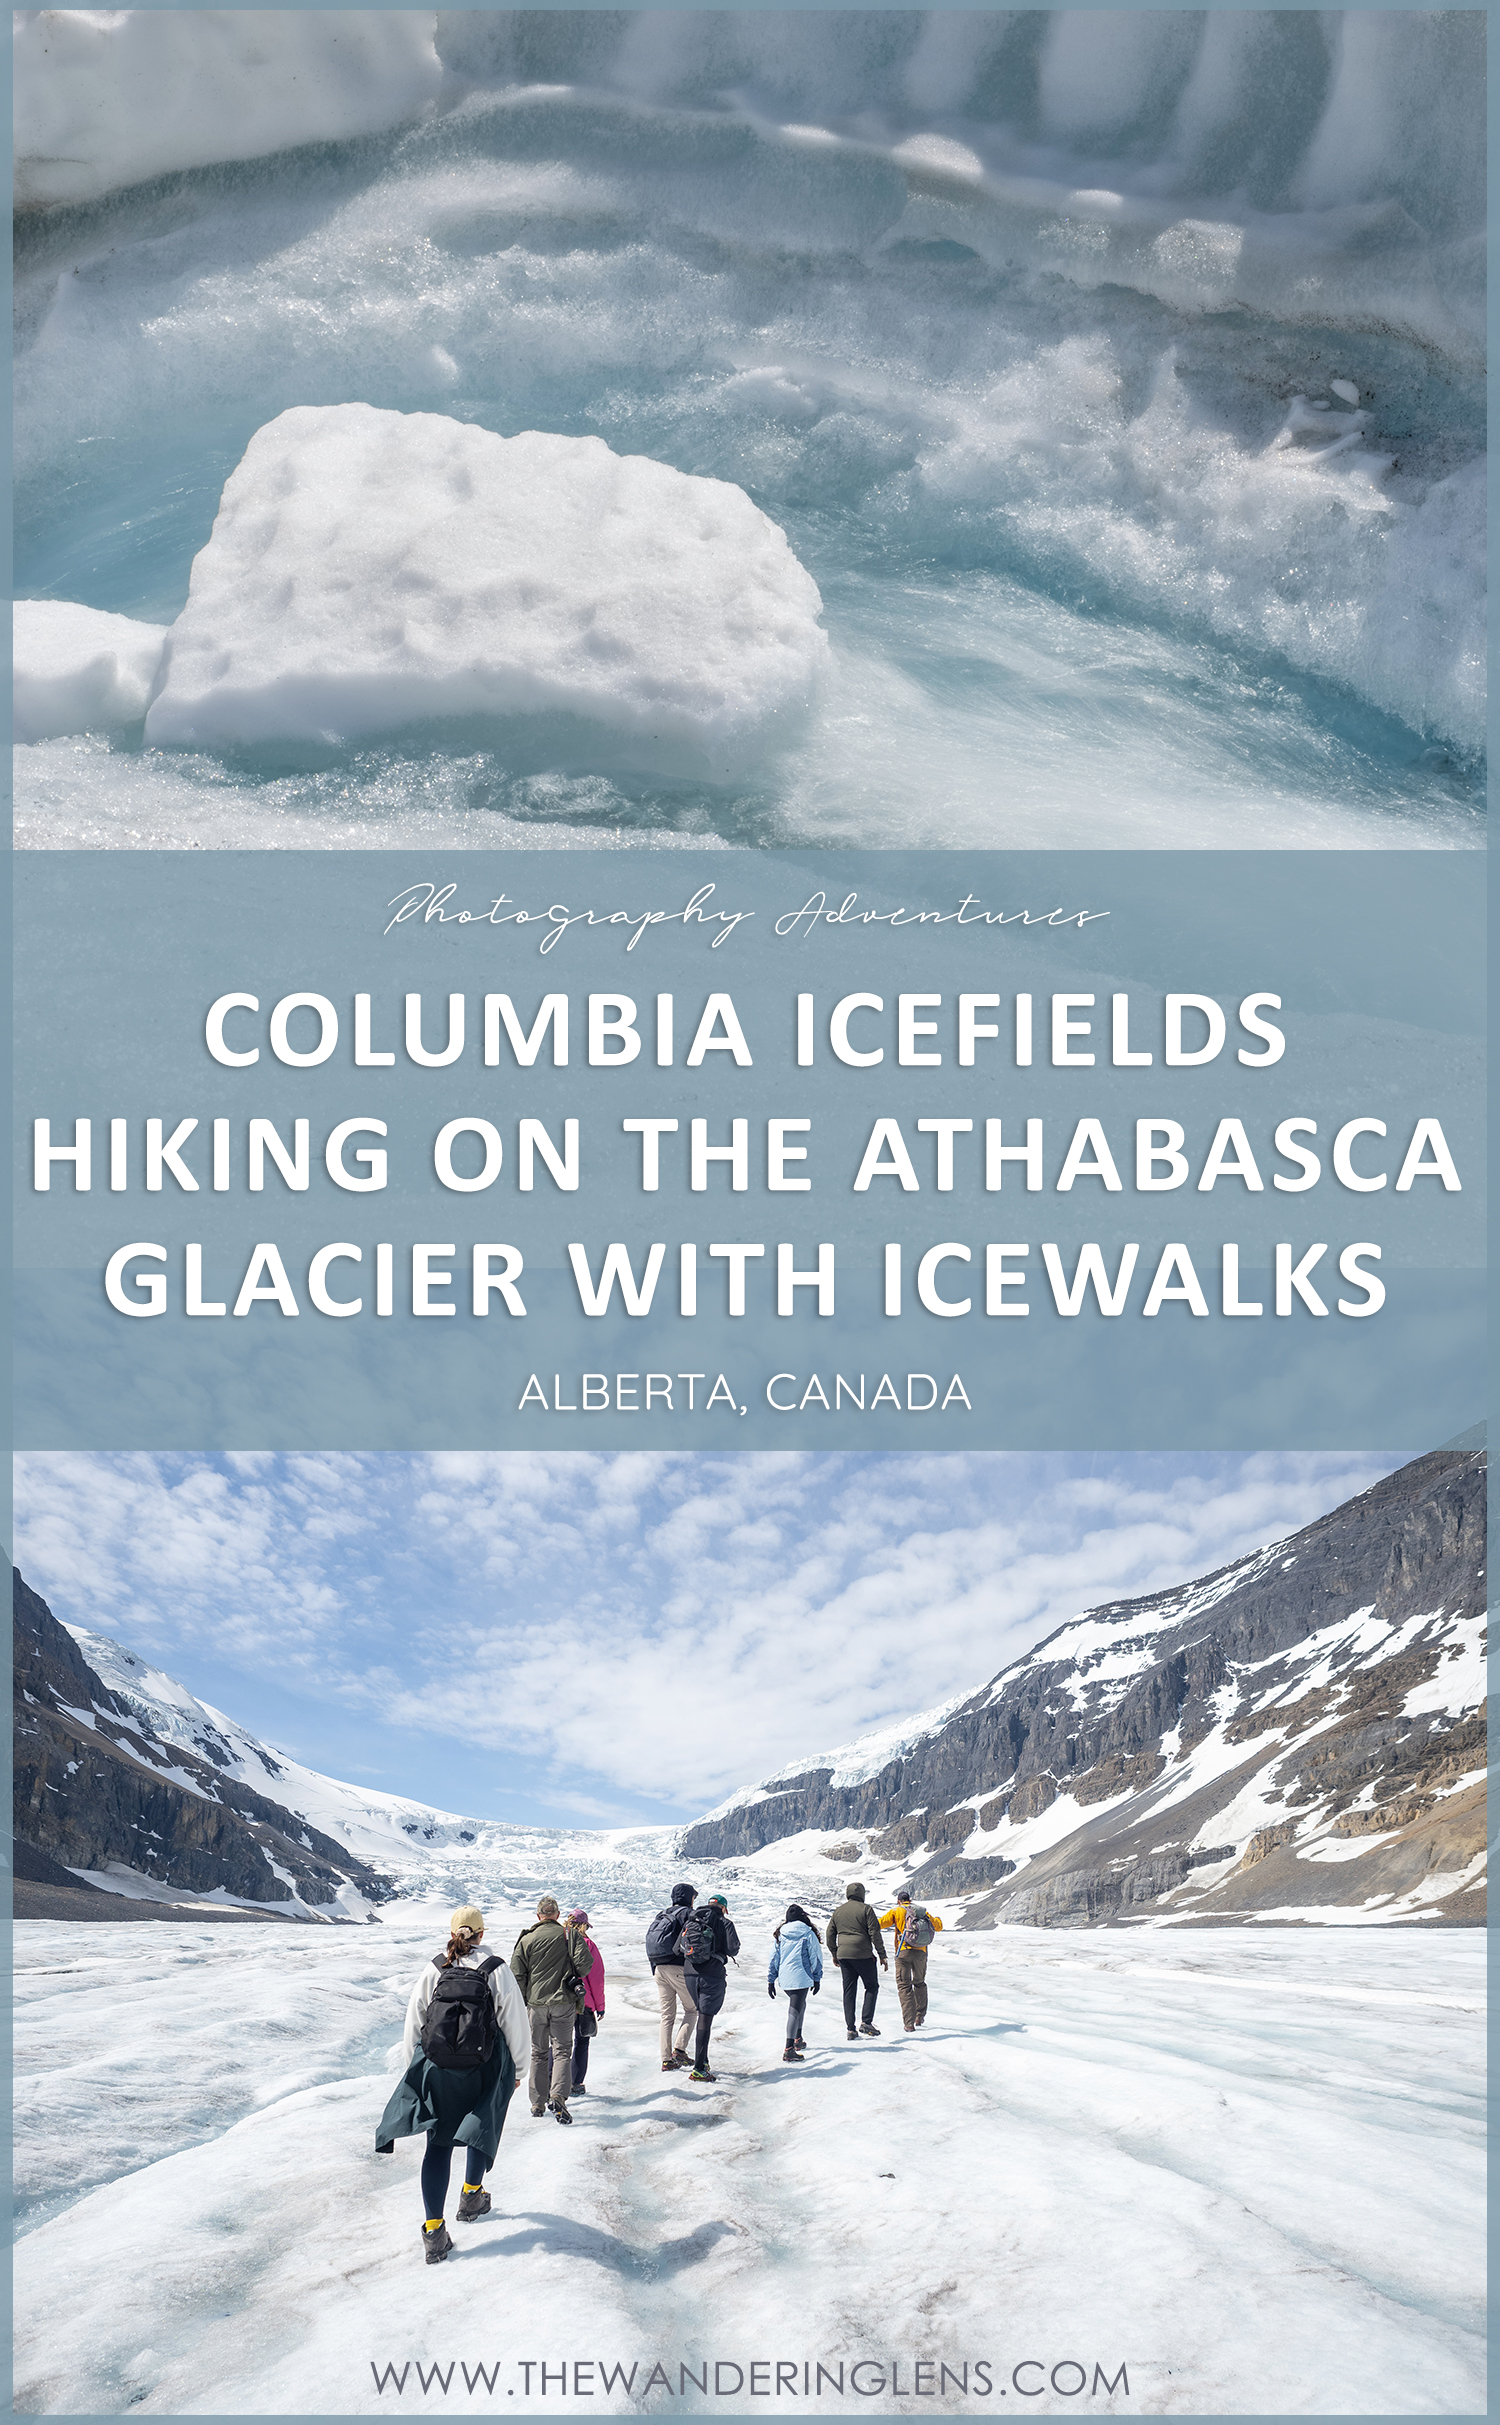 athabasca glacier tour worth it